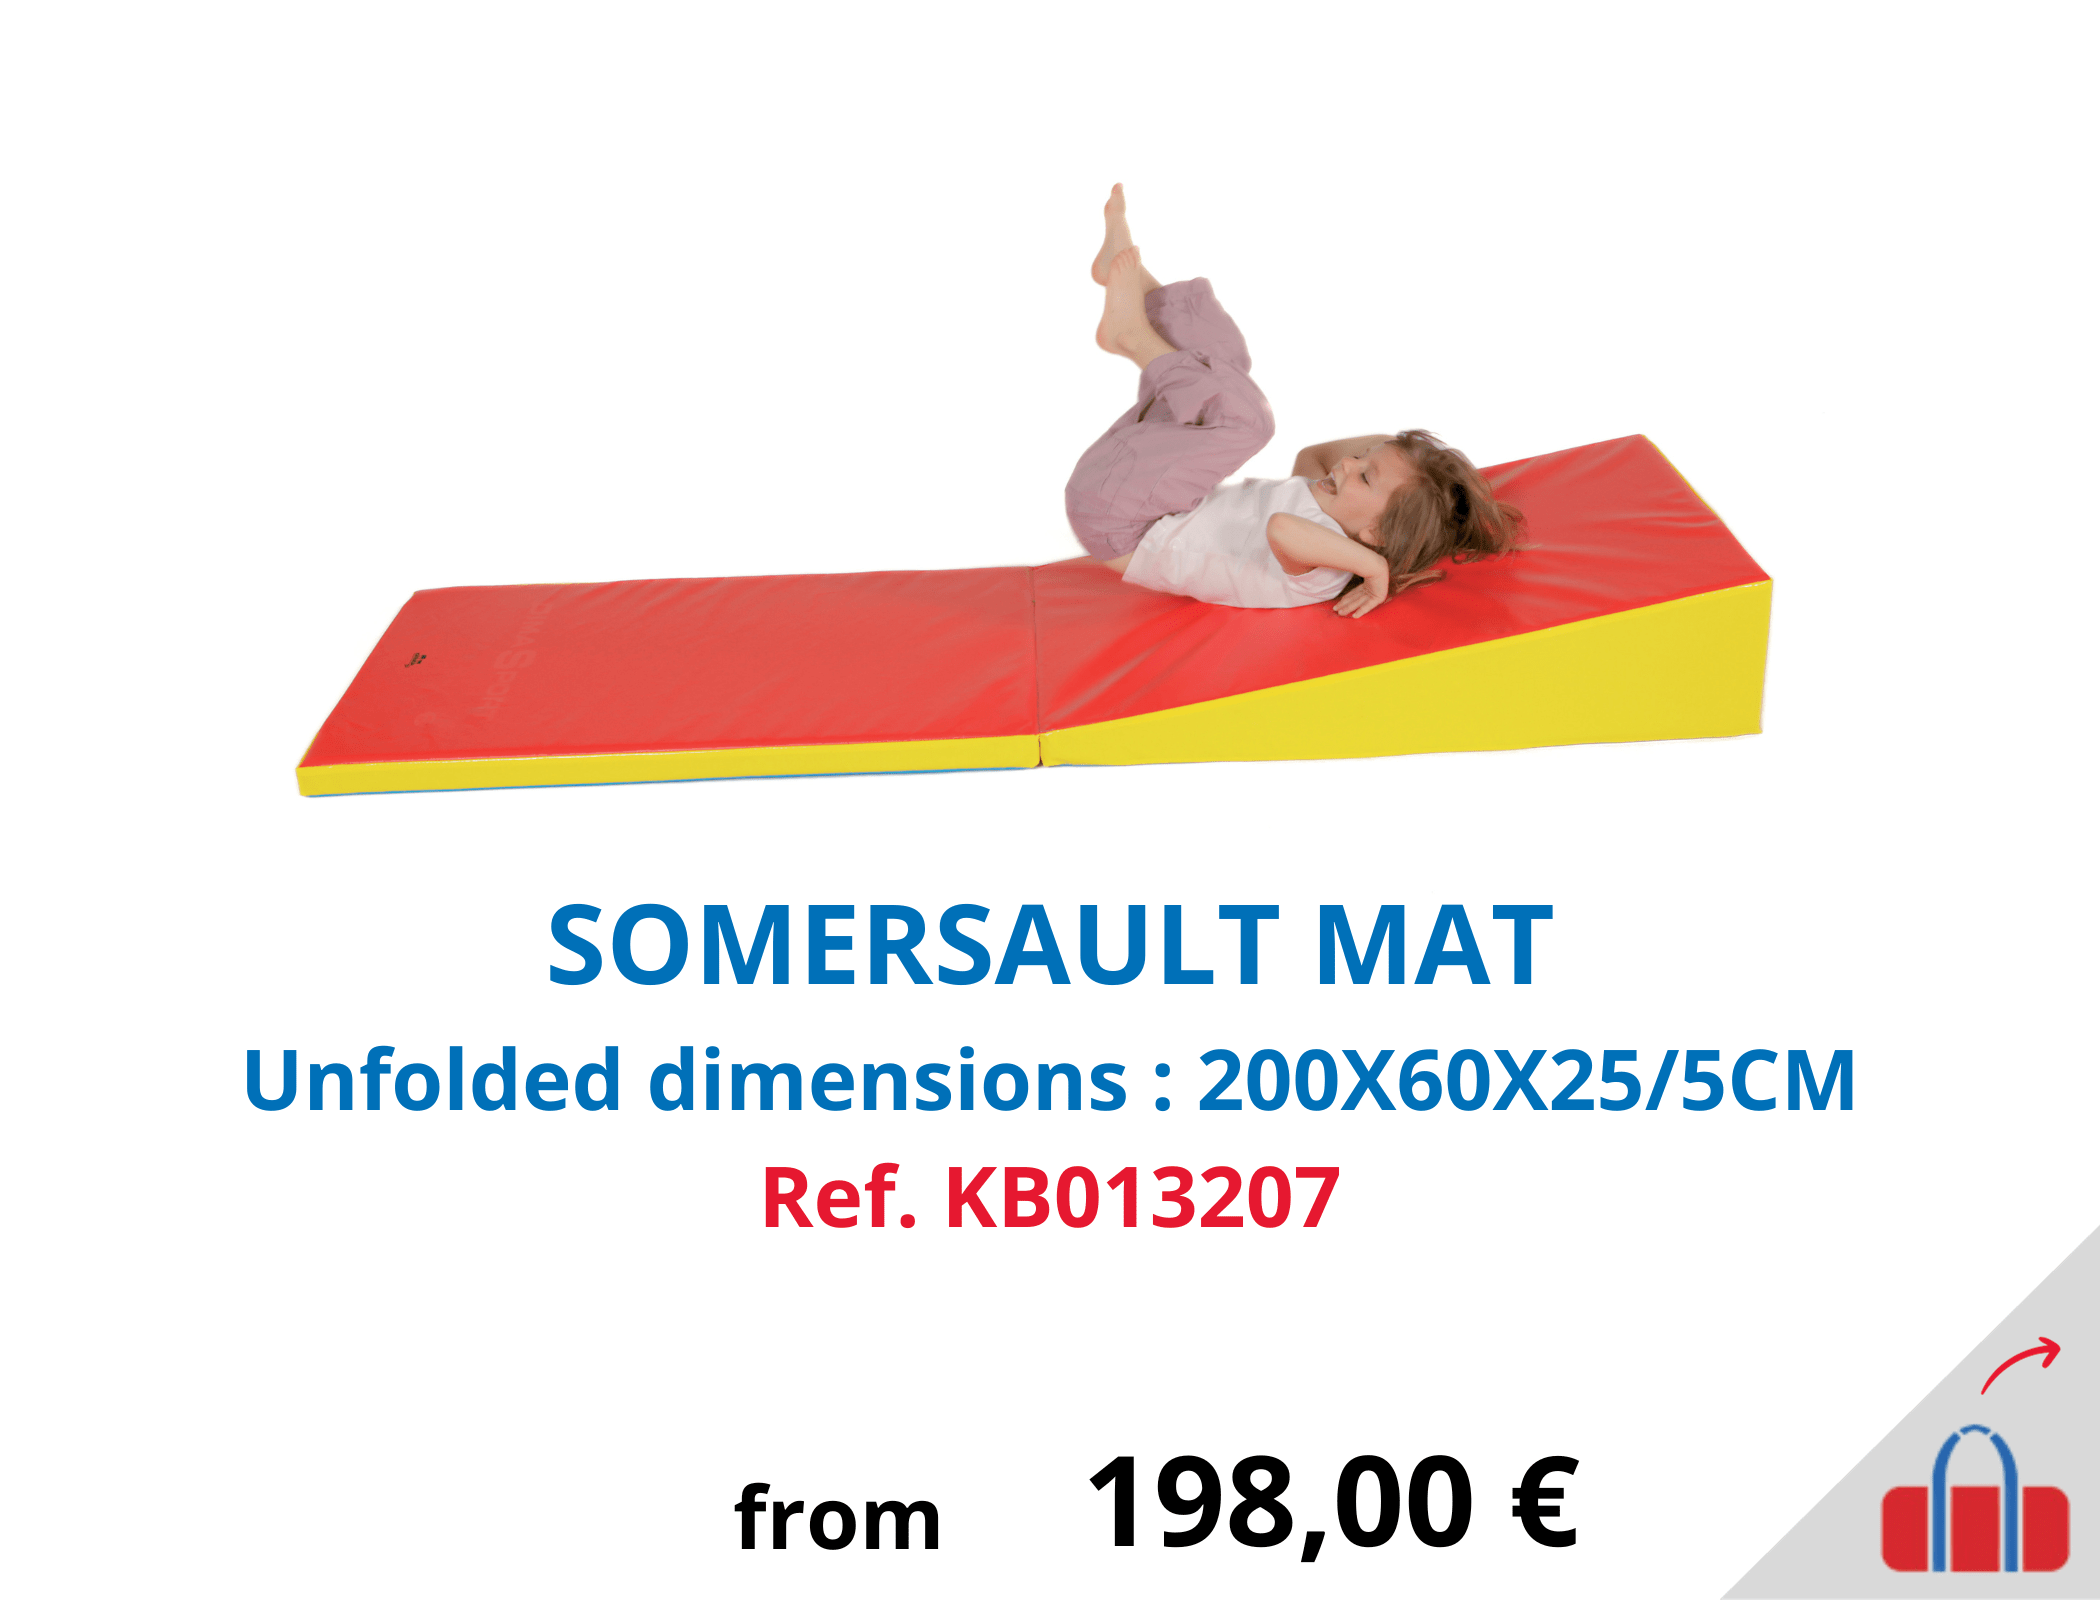 Somersault mat